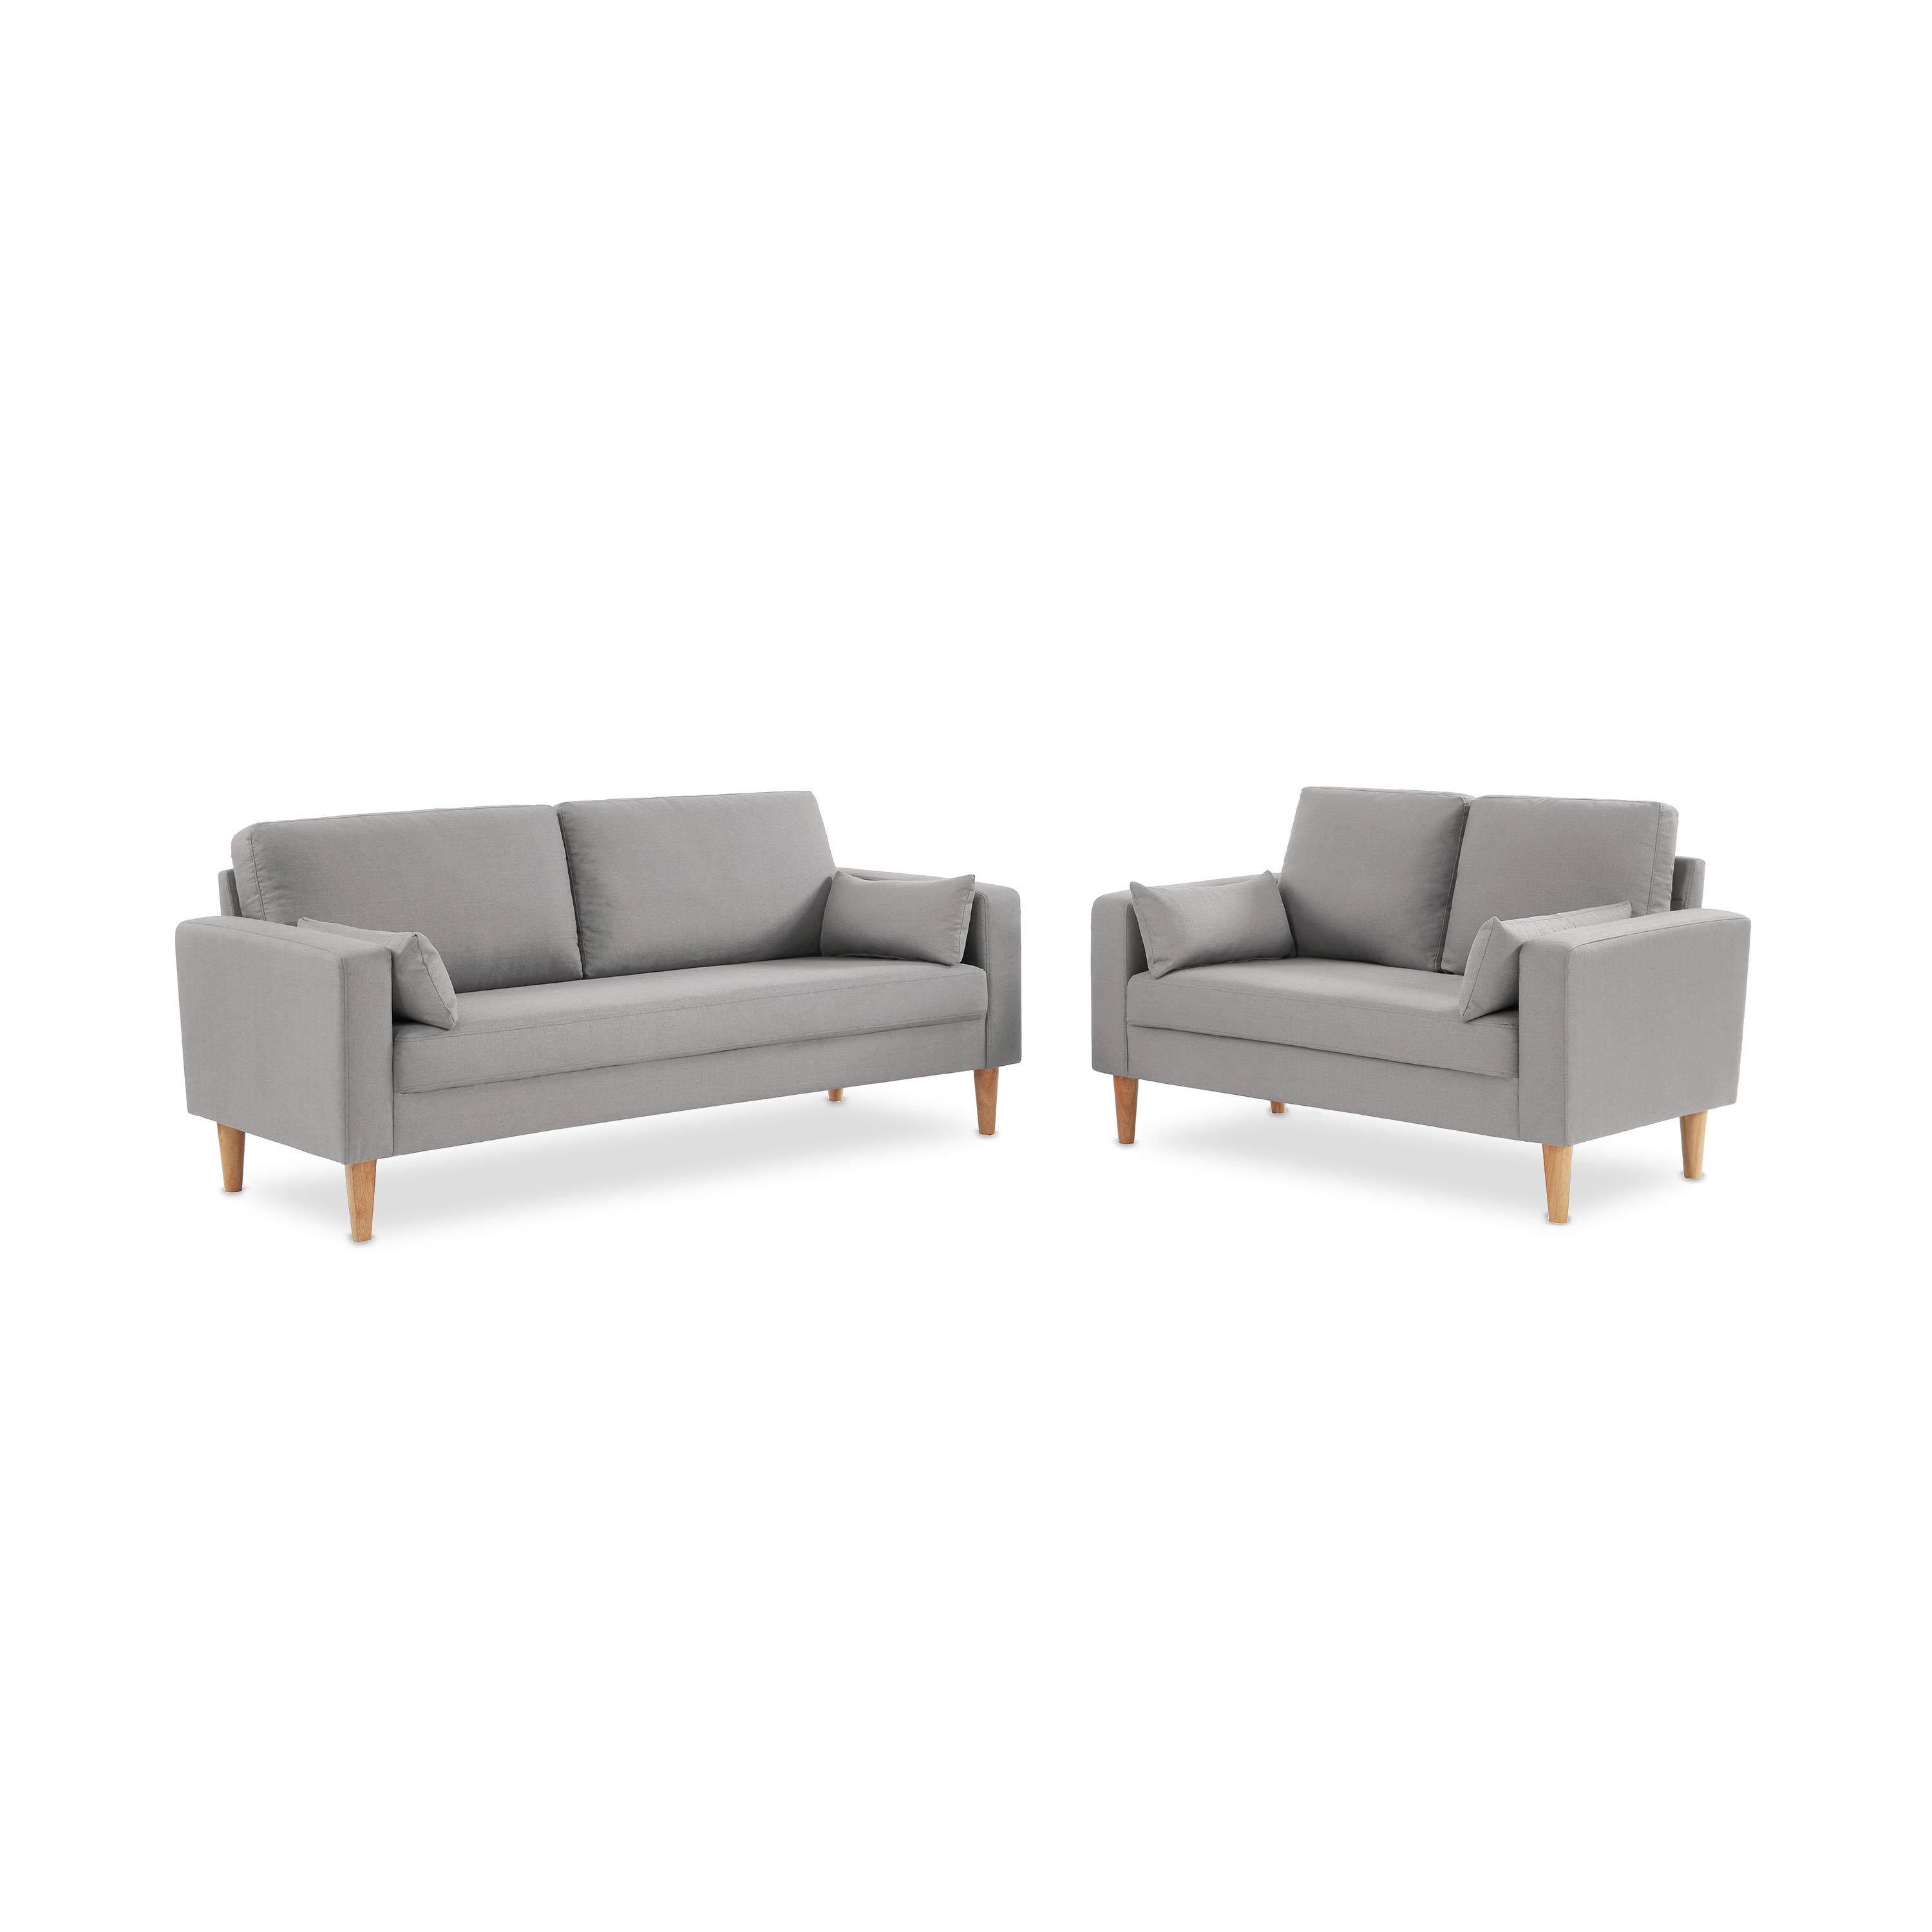 Medium 2-seater sofa Scandi-style with wooden legs - Bjorn - Light Grey,sweeek,Photo5